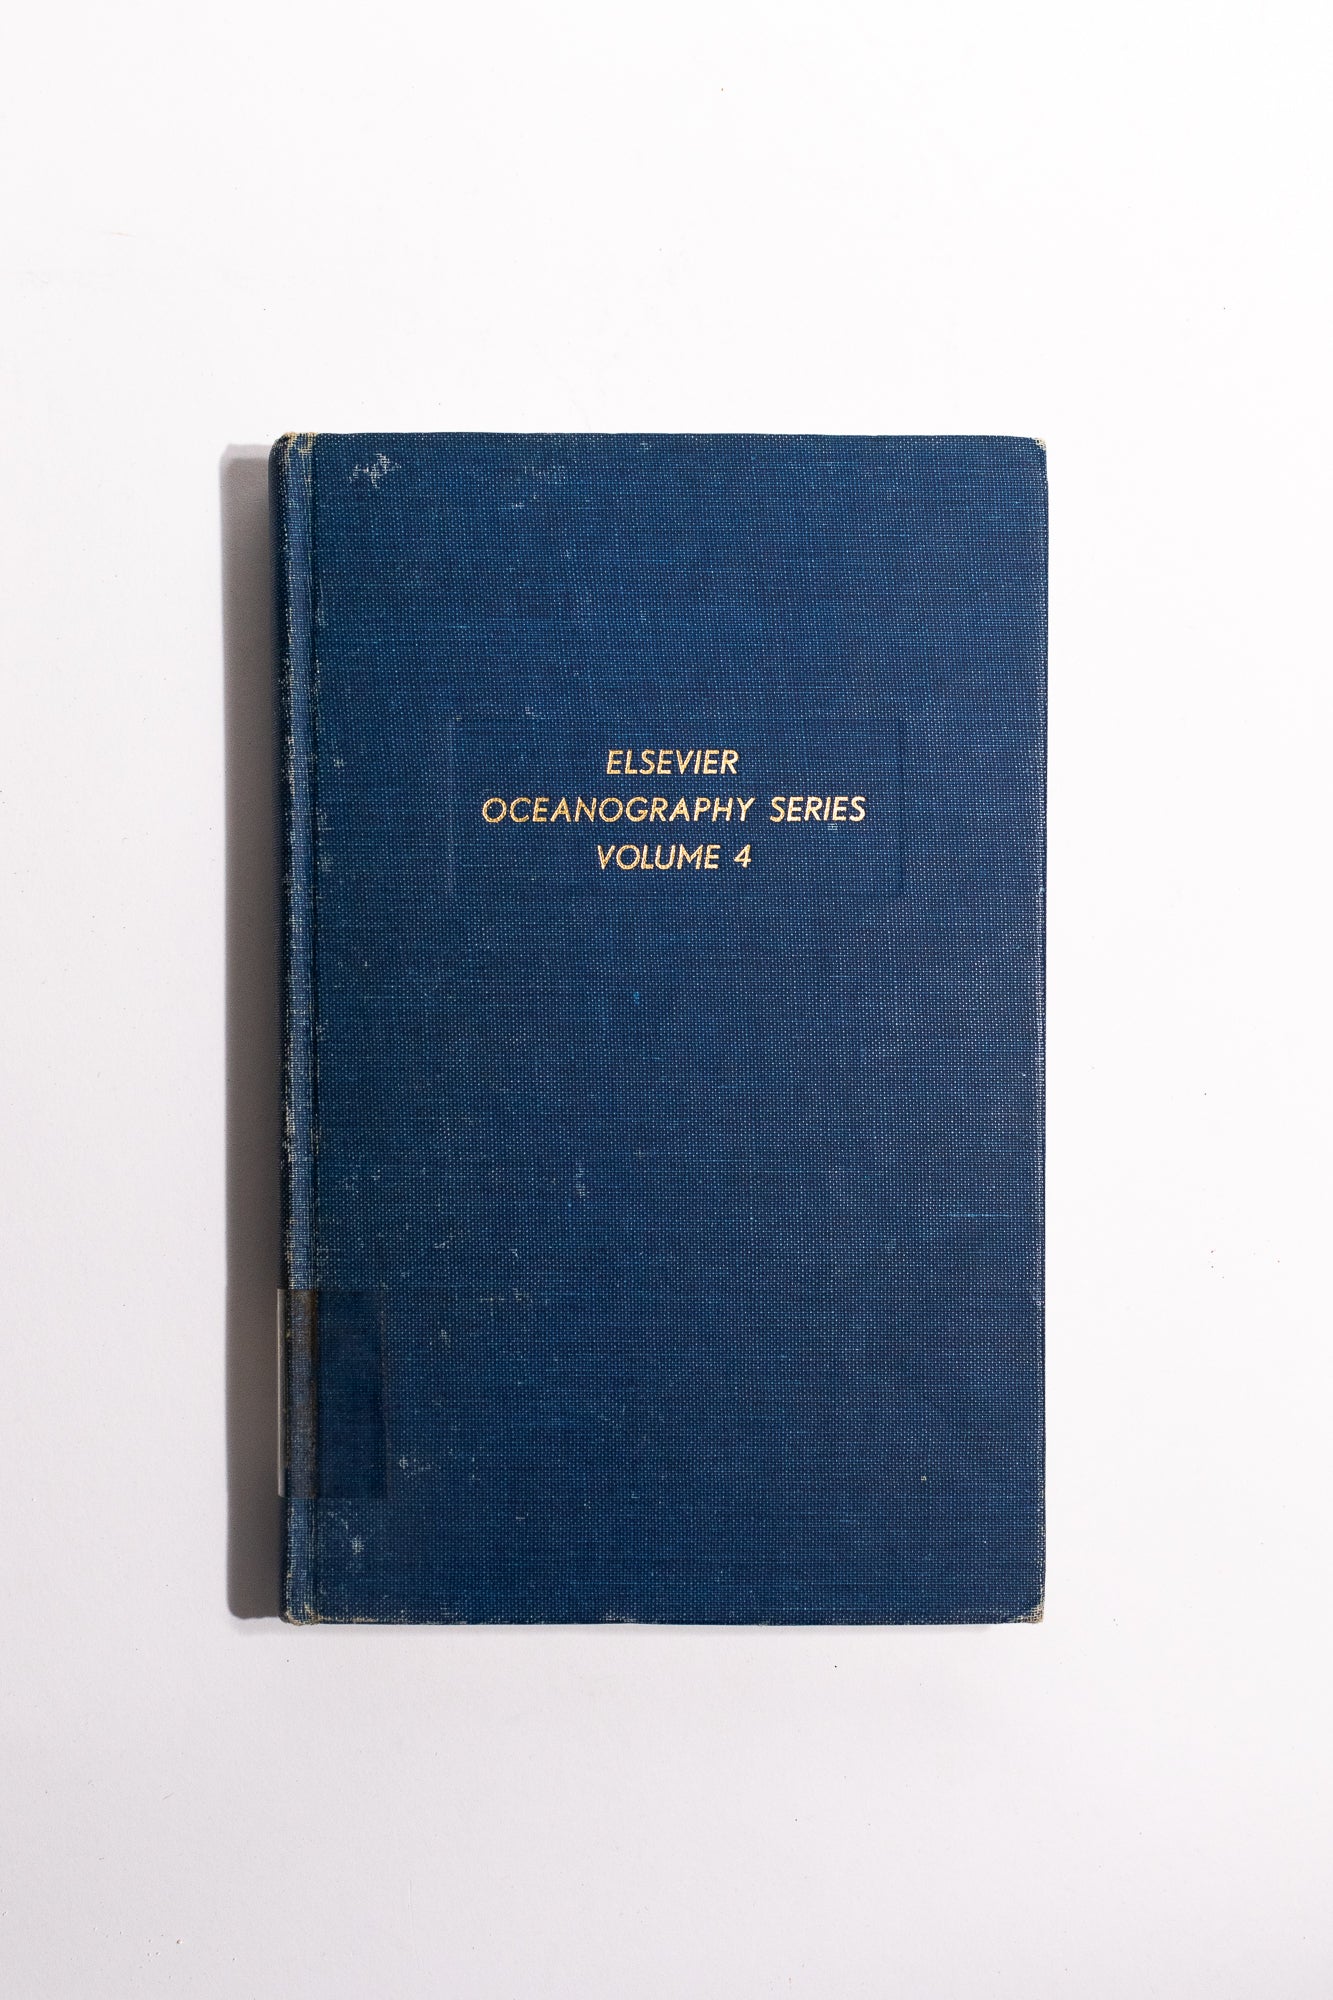 Ocean Currents: Oceanography Series Vol. 4 - Stemcell Science Shop